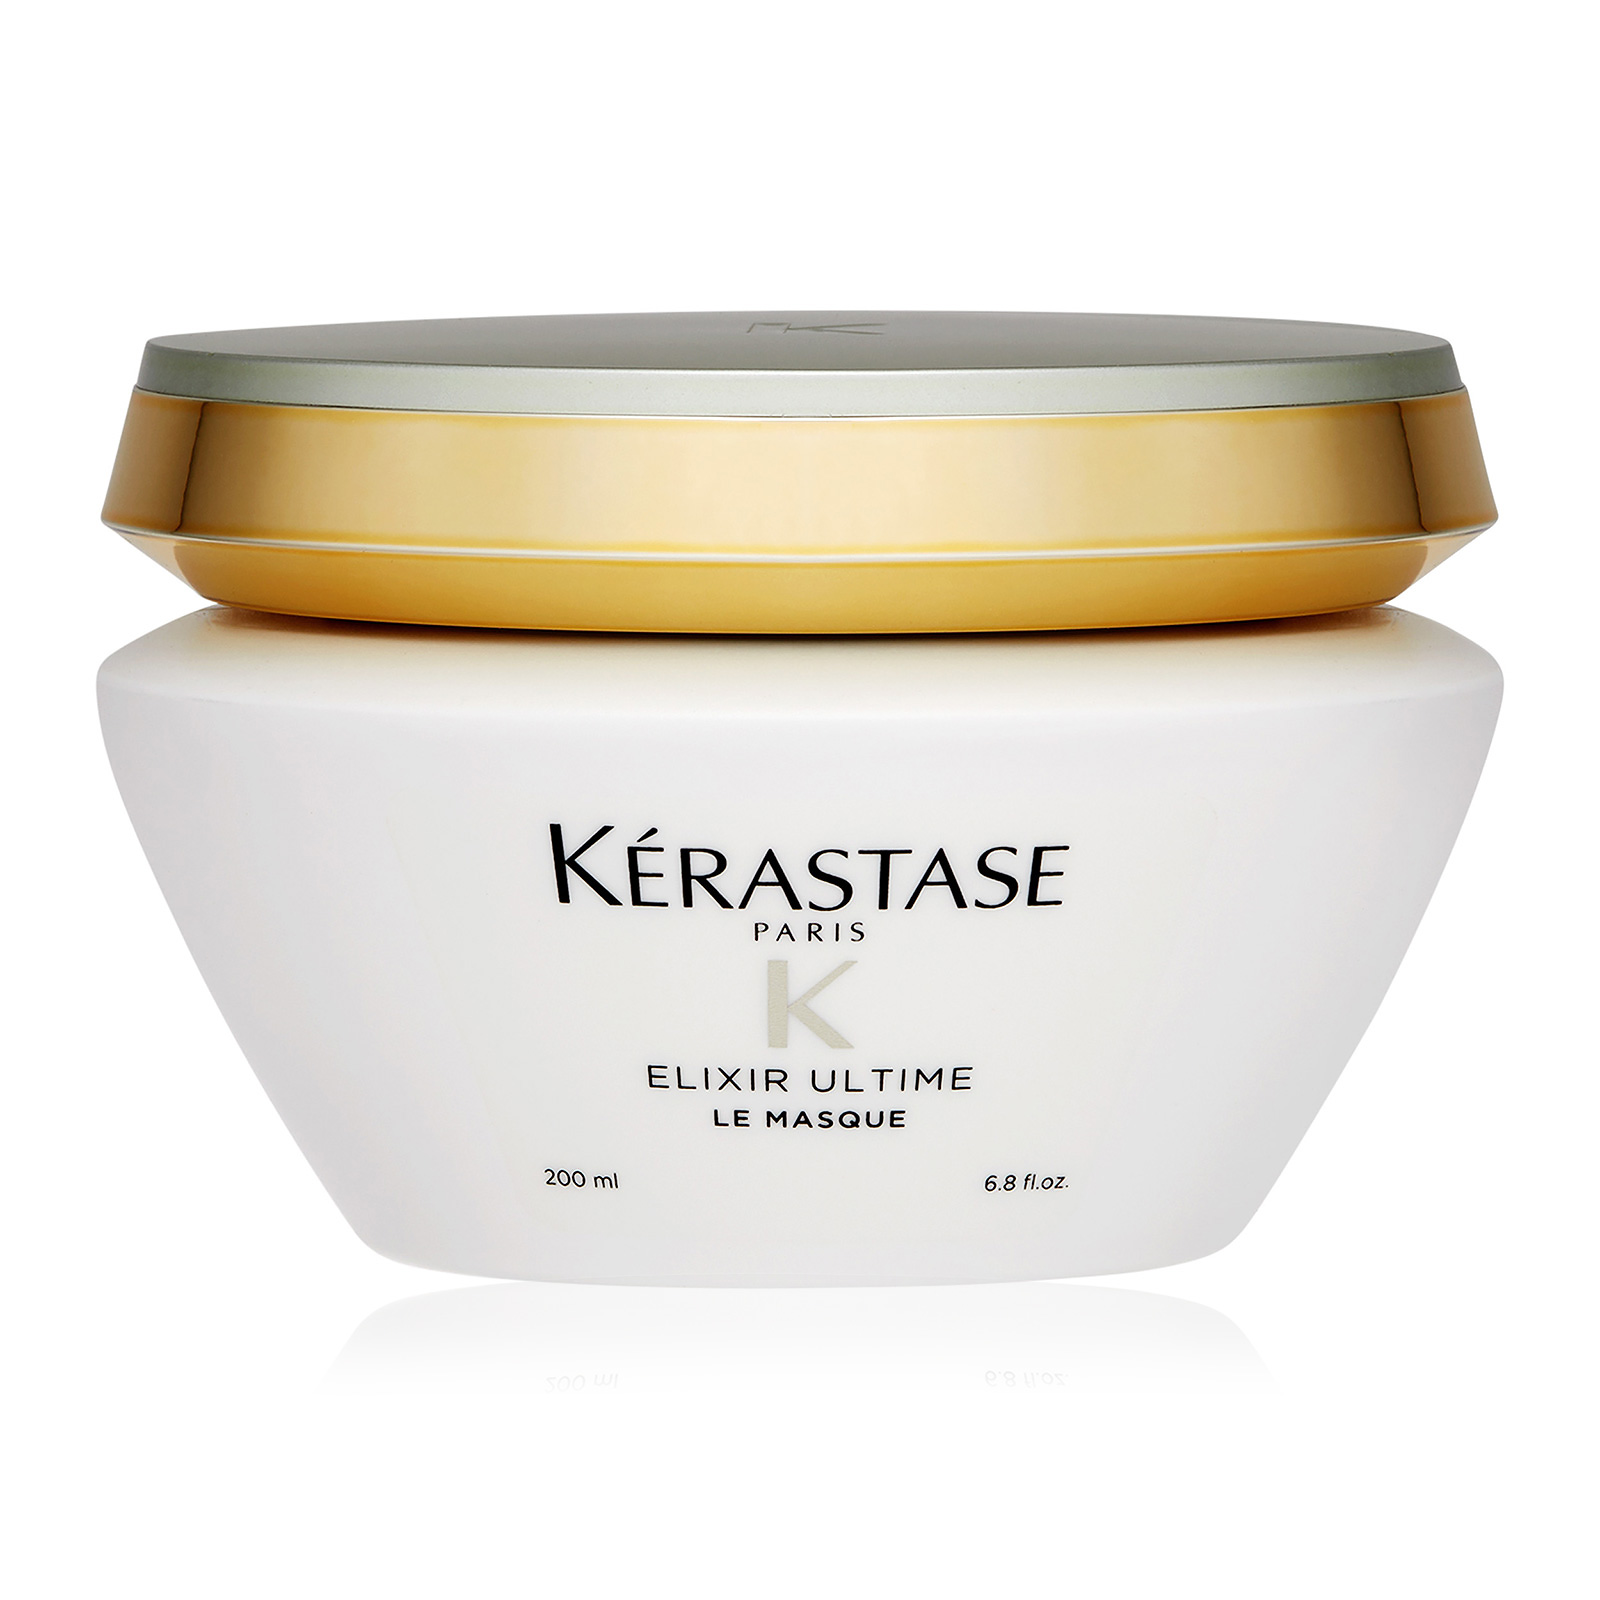 Kérastase Paris Elixir Ultime Le Masque Sublimating Oil Masque (Dull Hair)200 ml 6.8 oz AKB Beauty